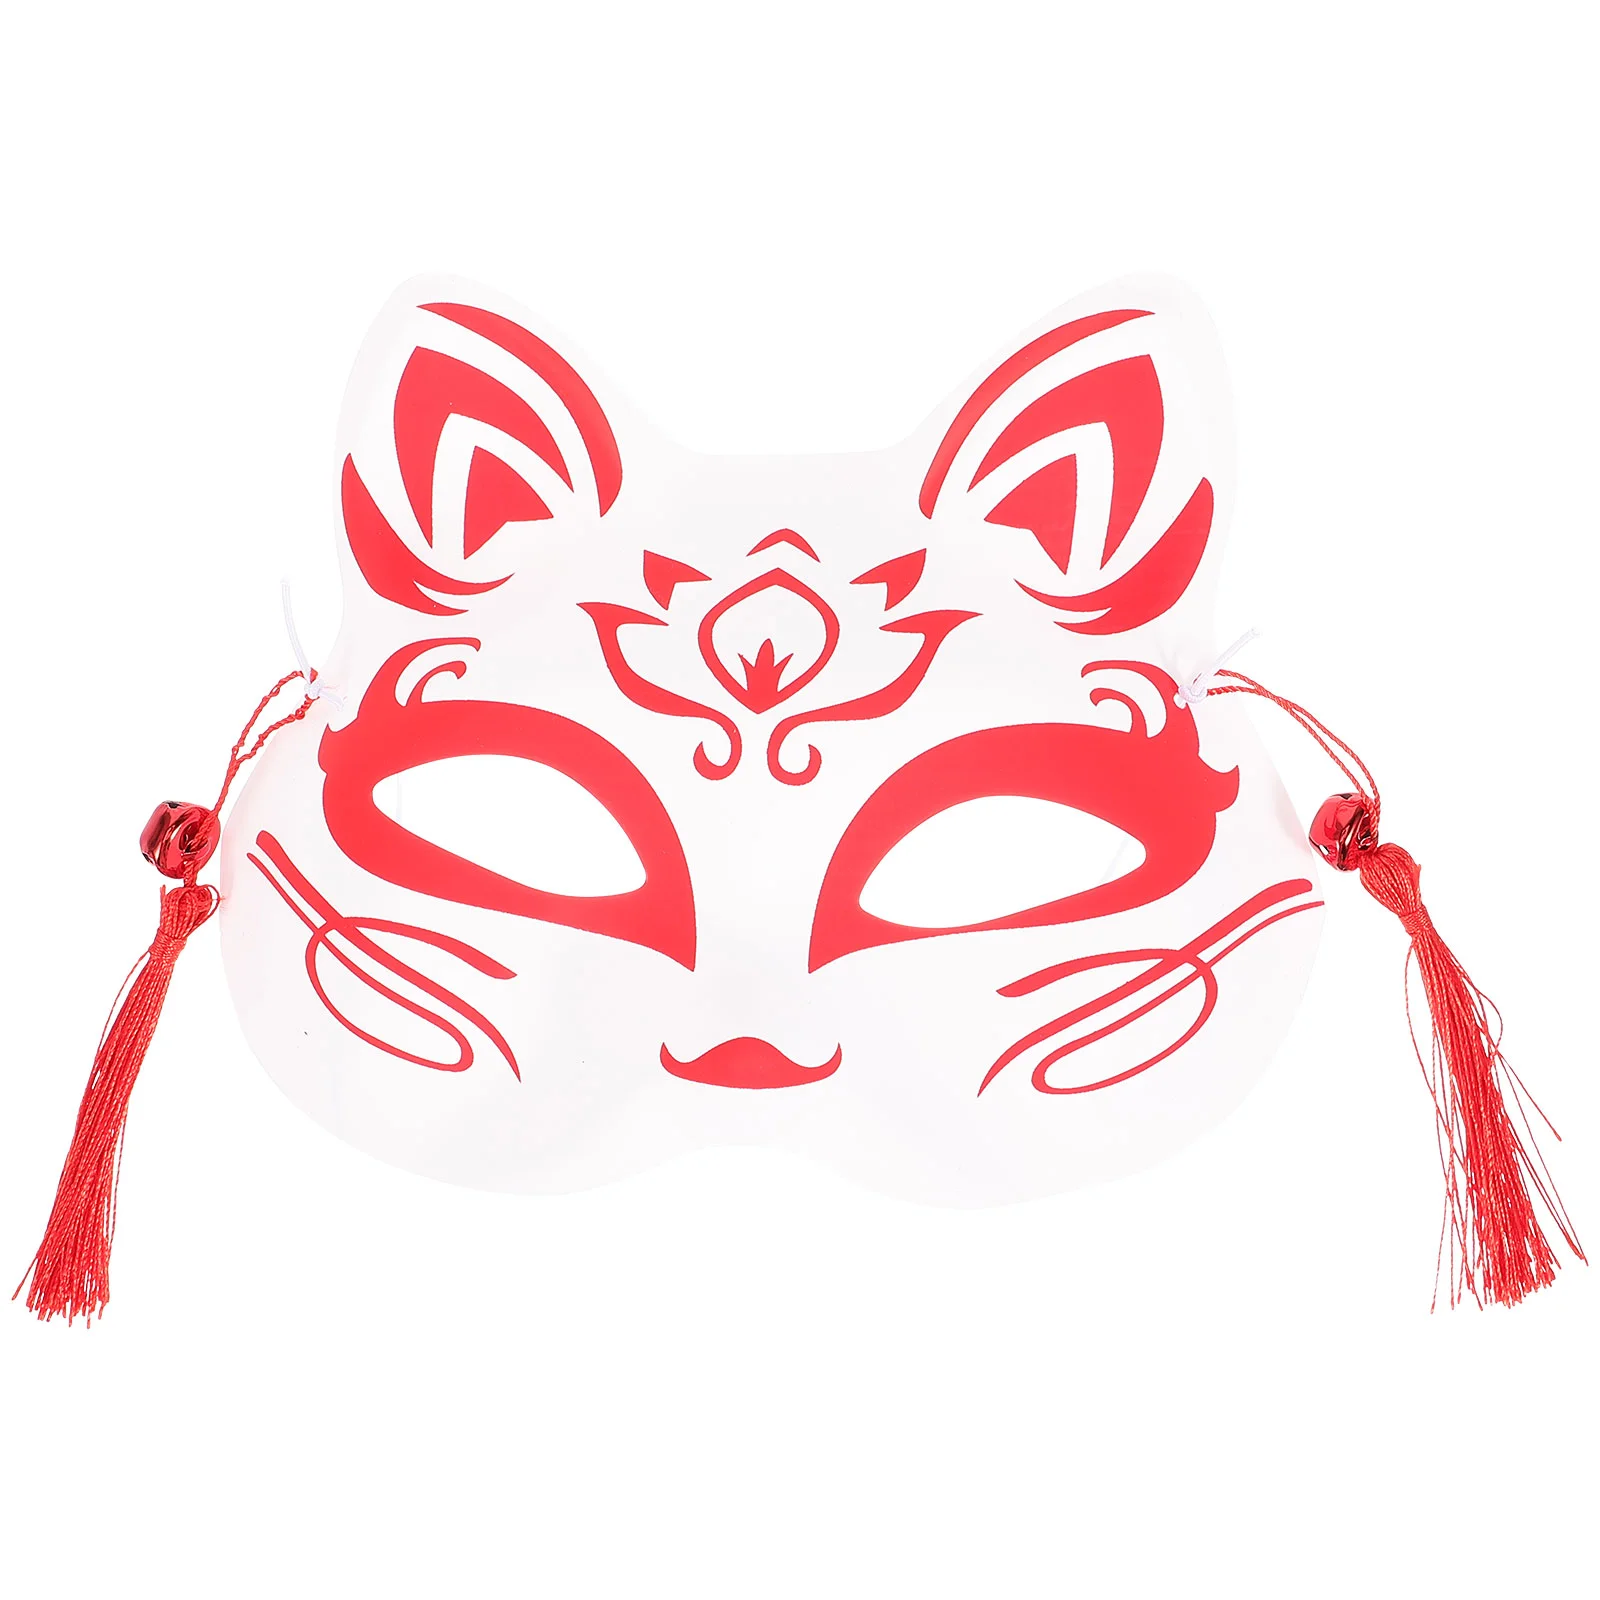 

Fox Mask Reusable Foxes Decorative Delicate Half Party Festival Masquerade Masks